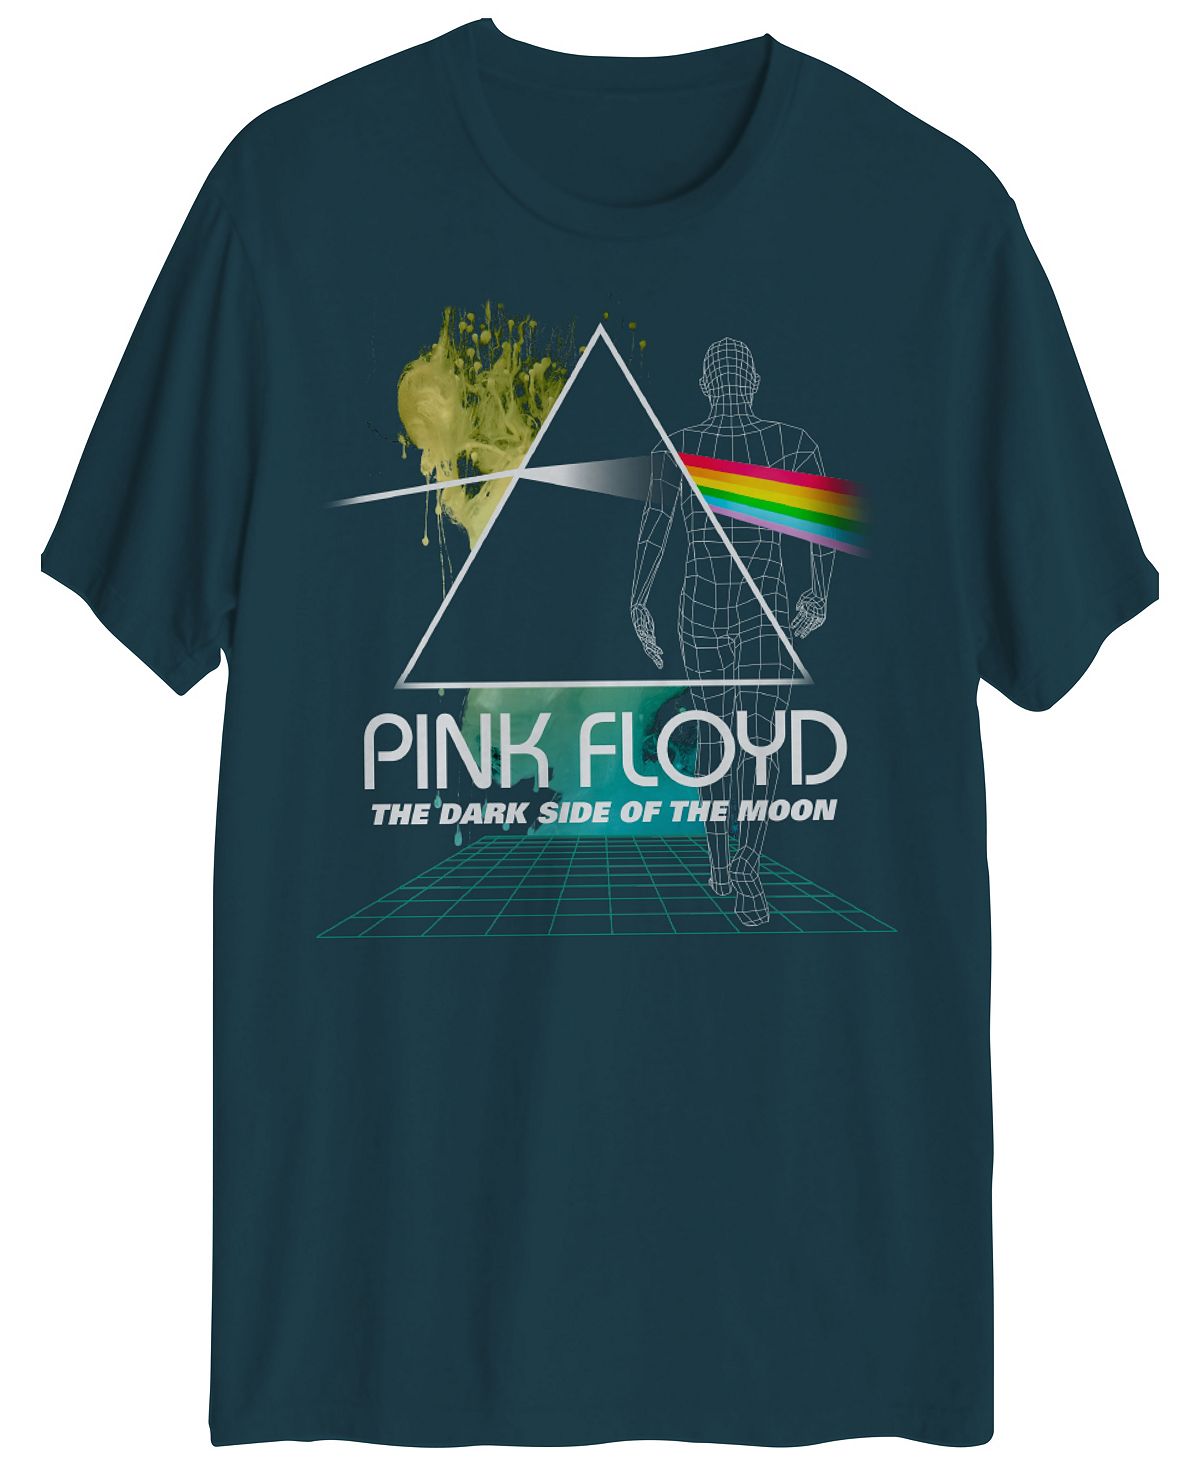 Мужская футболка Pink Floyd с короткими рукавами Hybrid pink floyd records pink floyd dark side of the moon cd